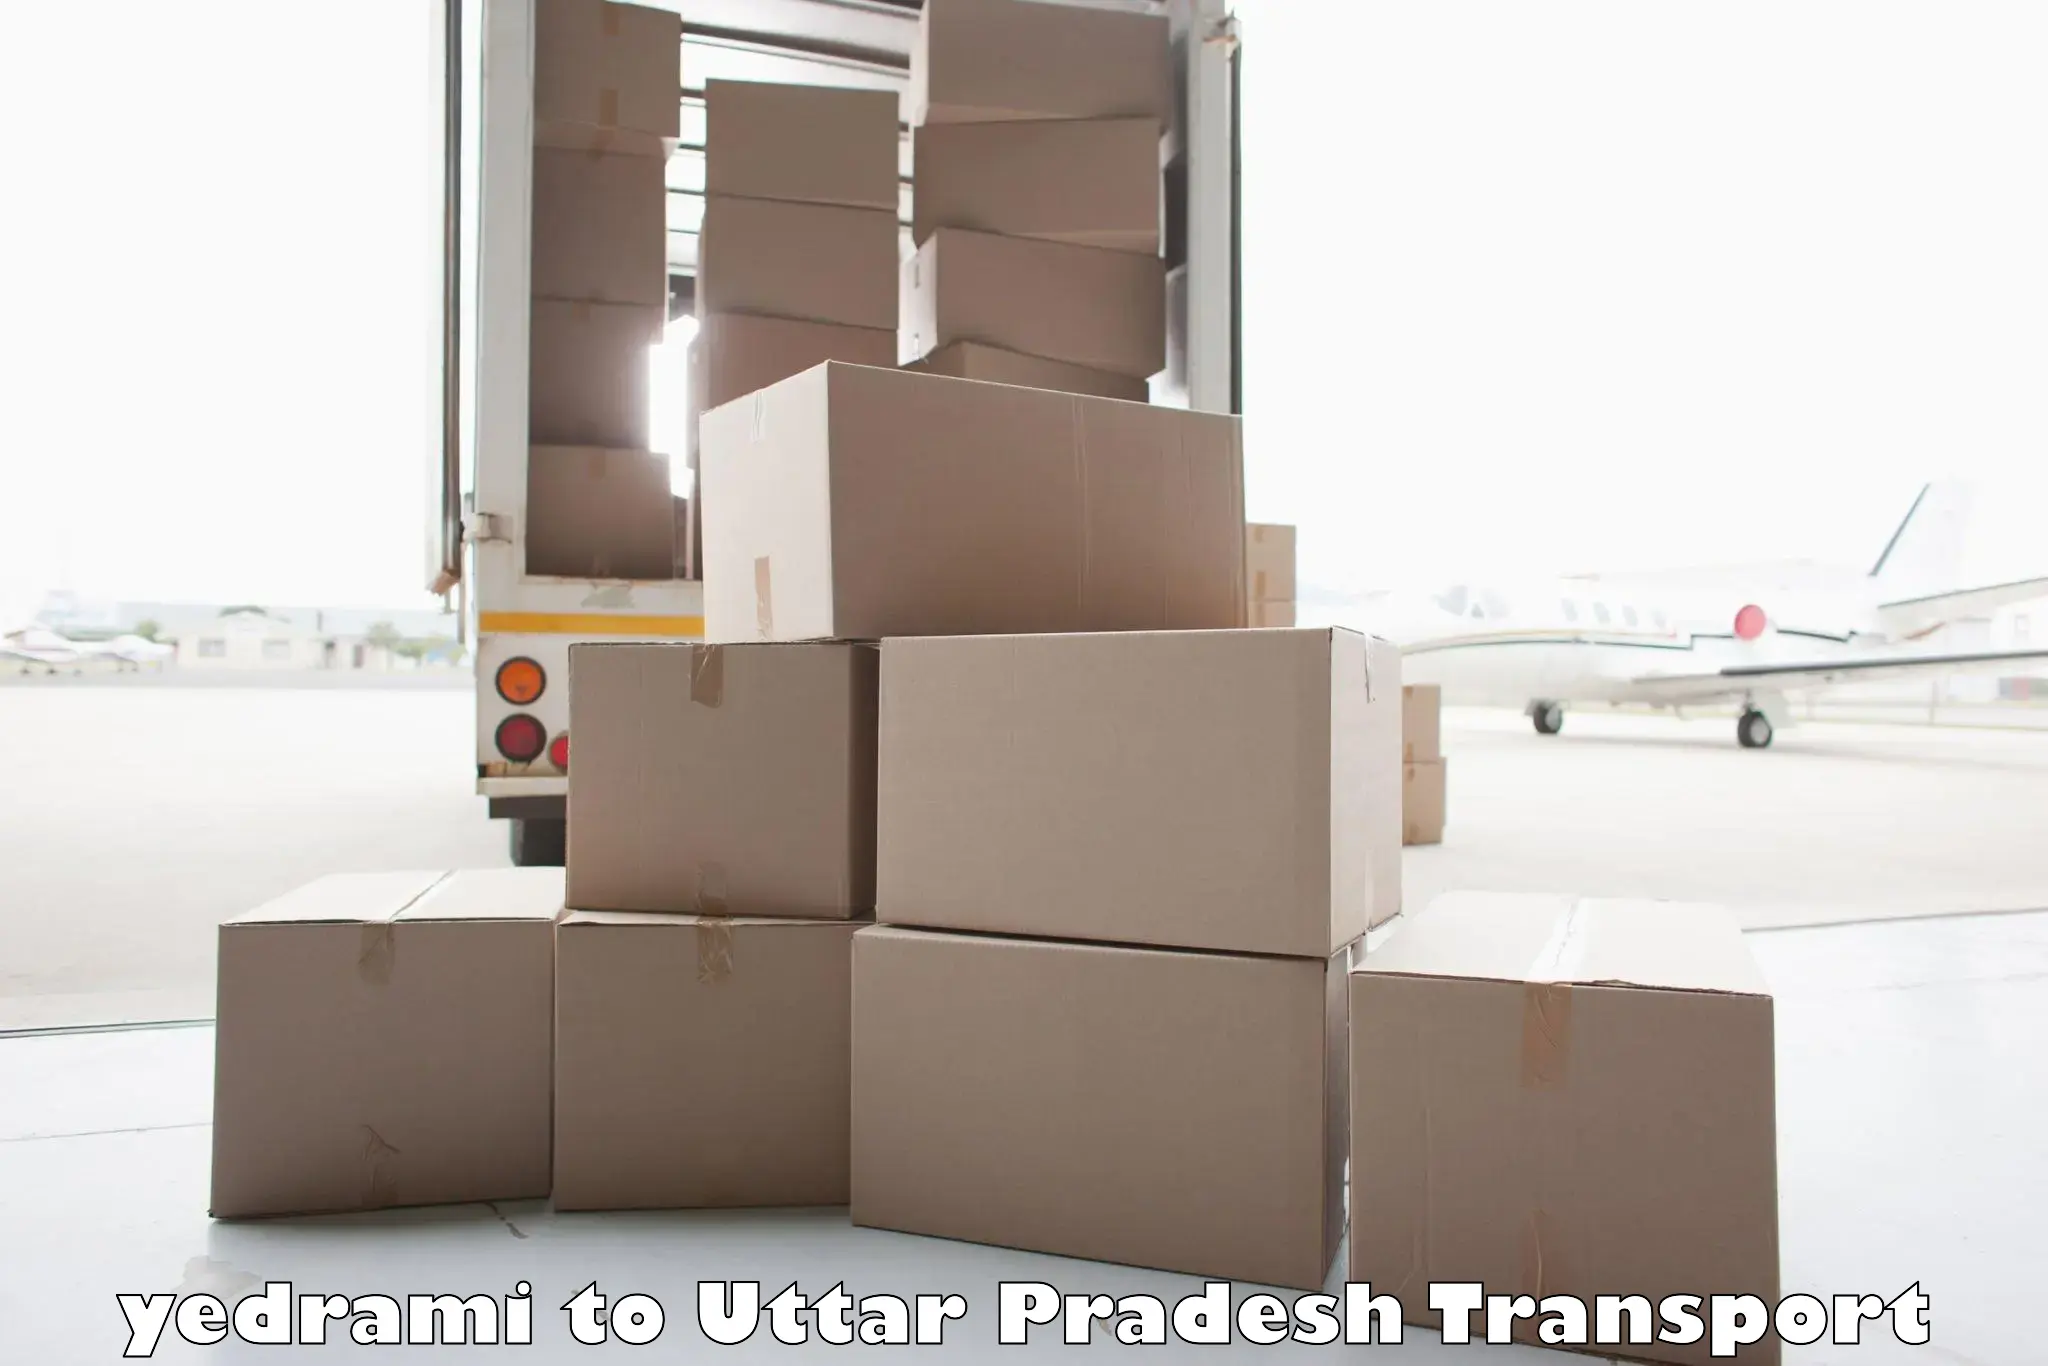 Daily parcel service transport in yedrami to Gorakhpur